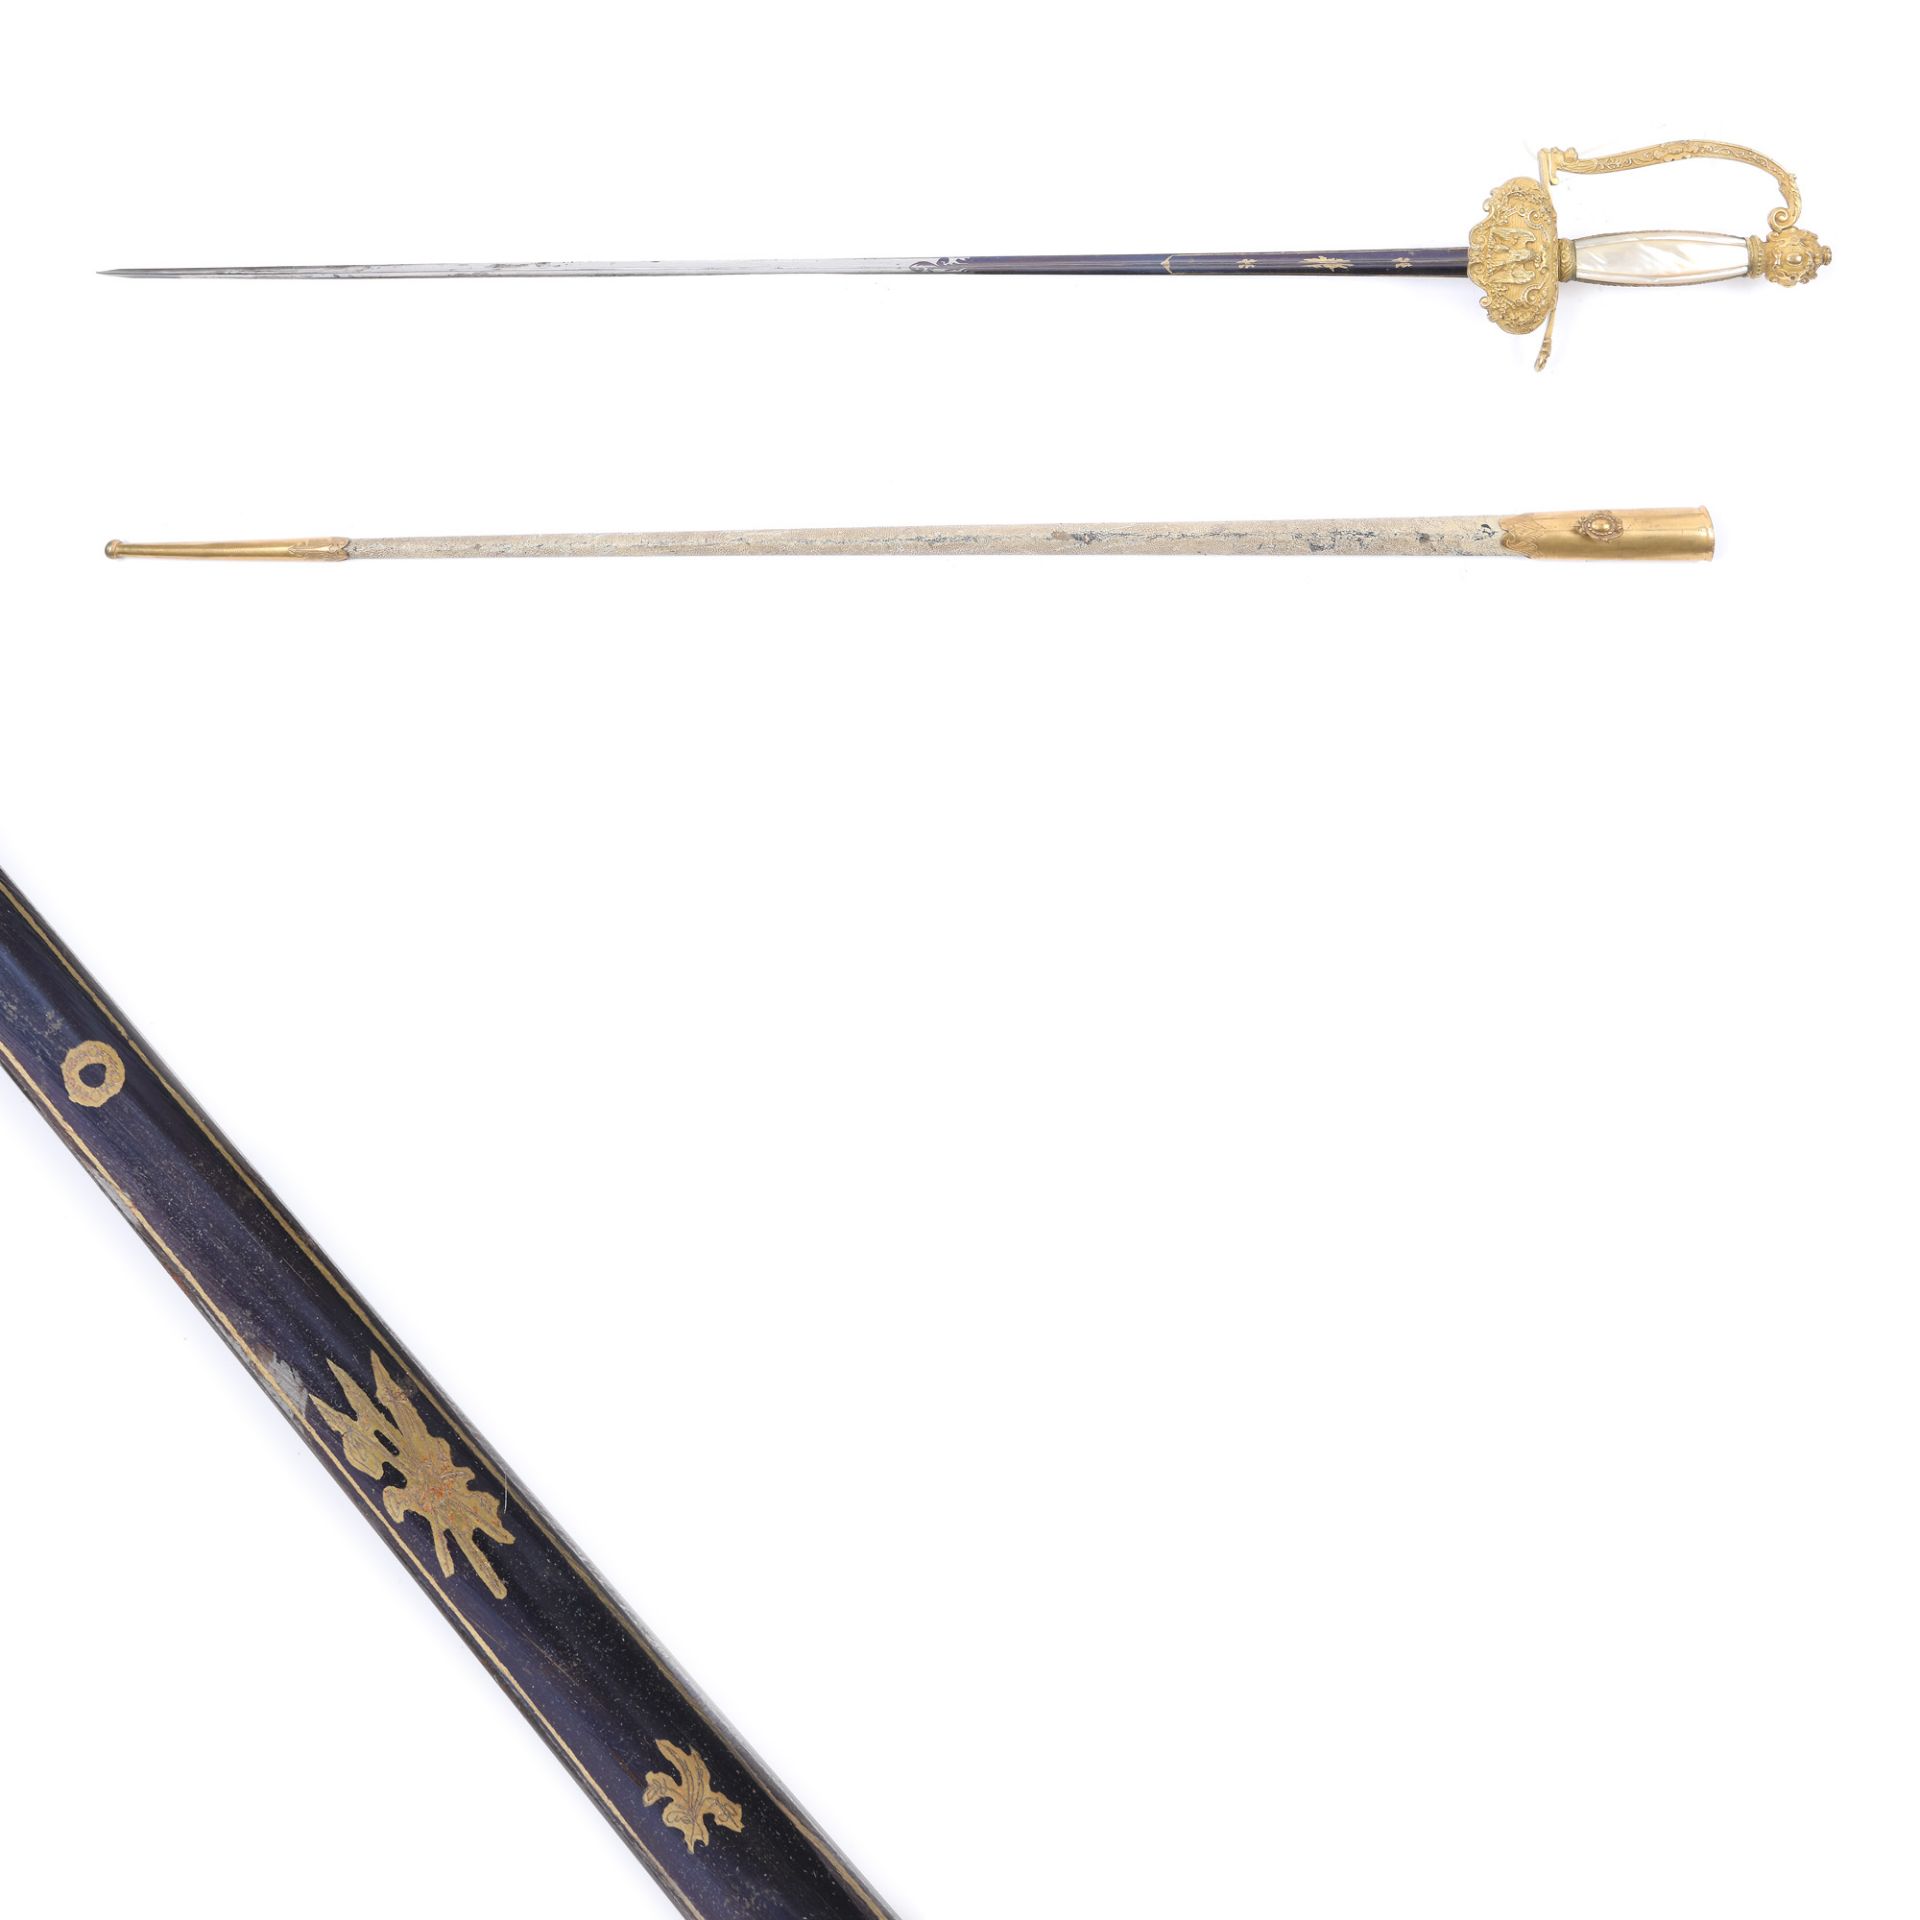 Ceremonial Ambassador's sword, with sheath, France, Napoleon III period, mid-19th century, collector